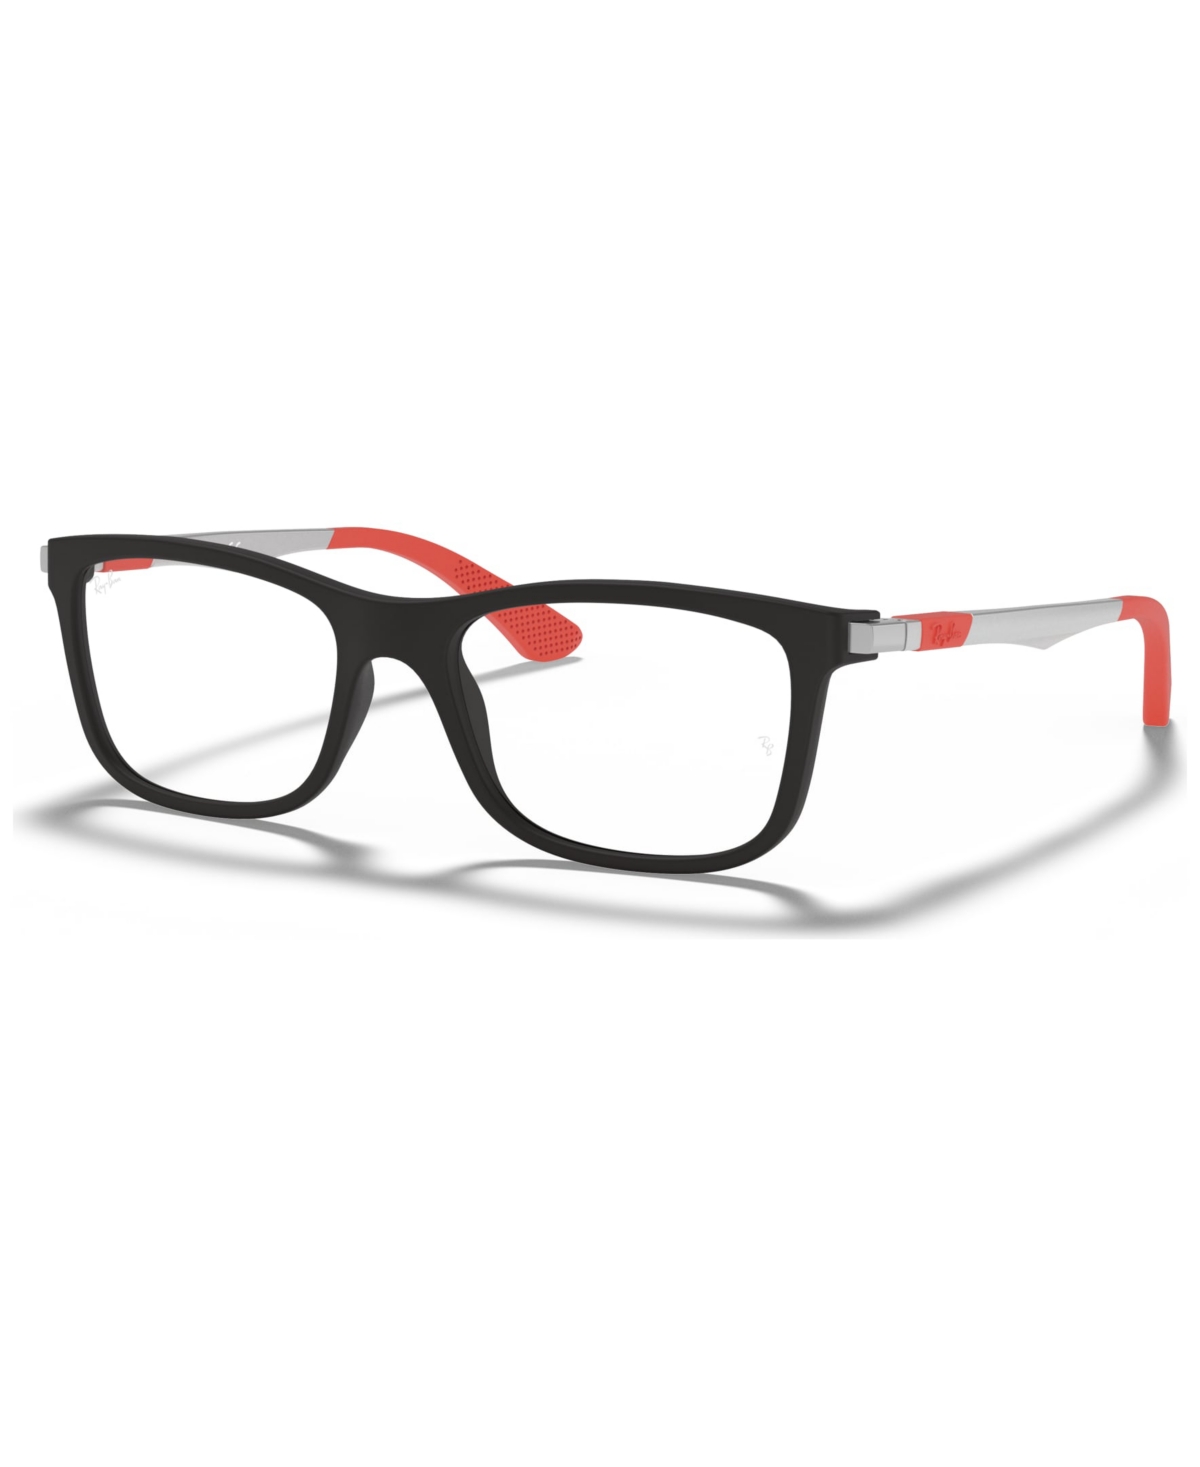 Child Eyeglasses, RB1549 - Black